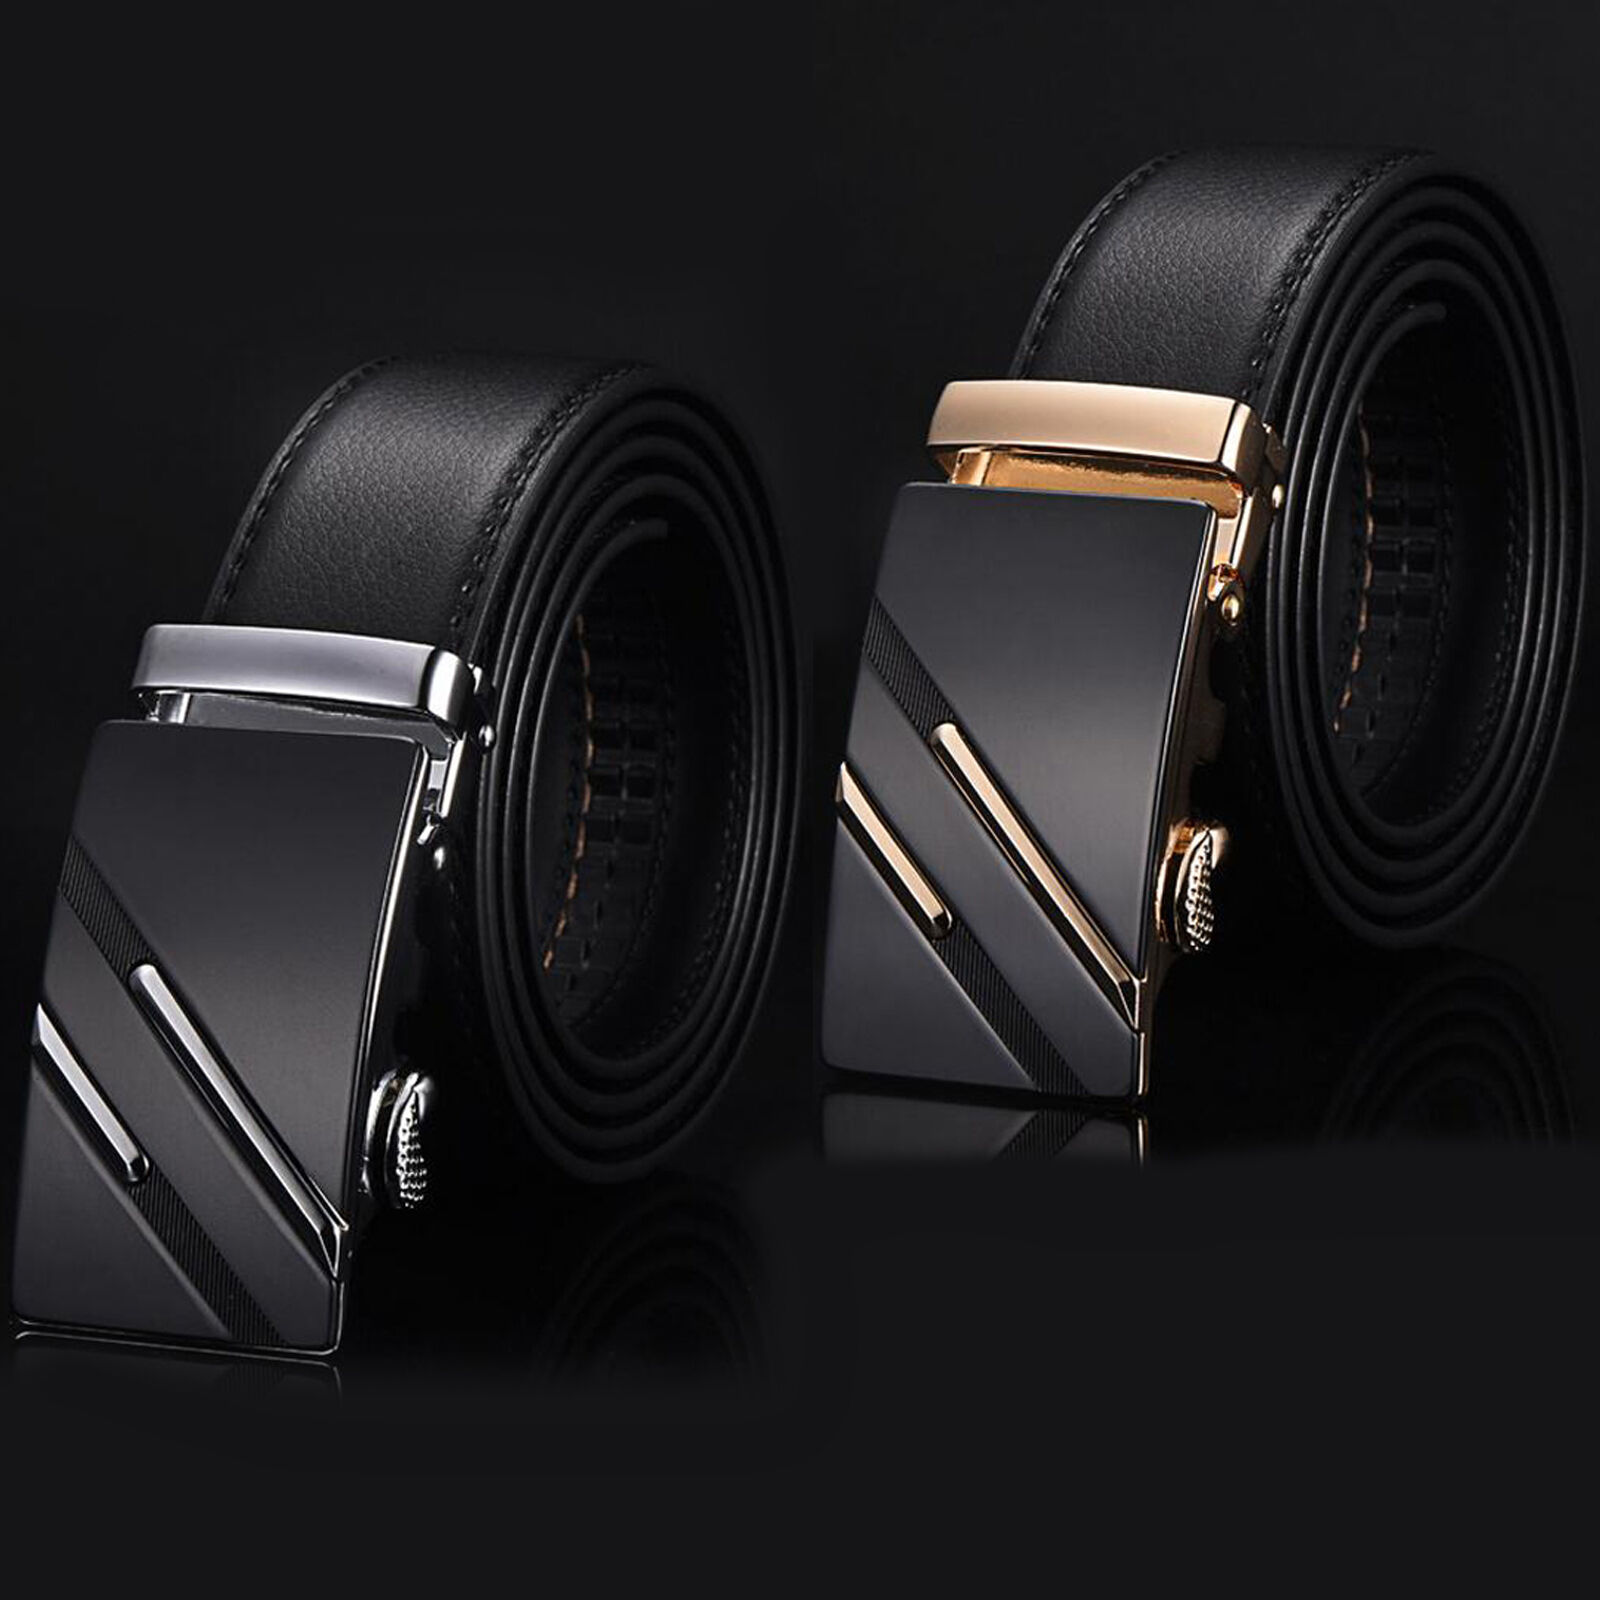 Genuine Leather Men's Automatic Buckle Belts Fashion Waist Strap Belt Waistband